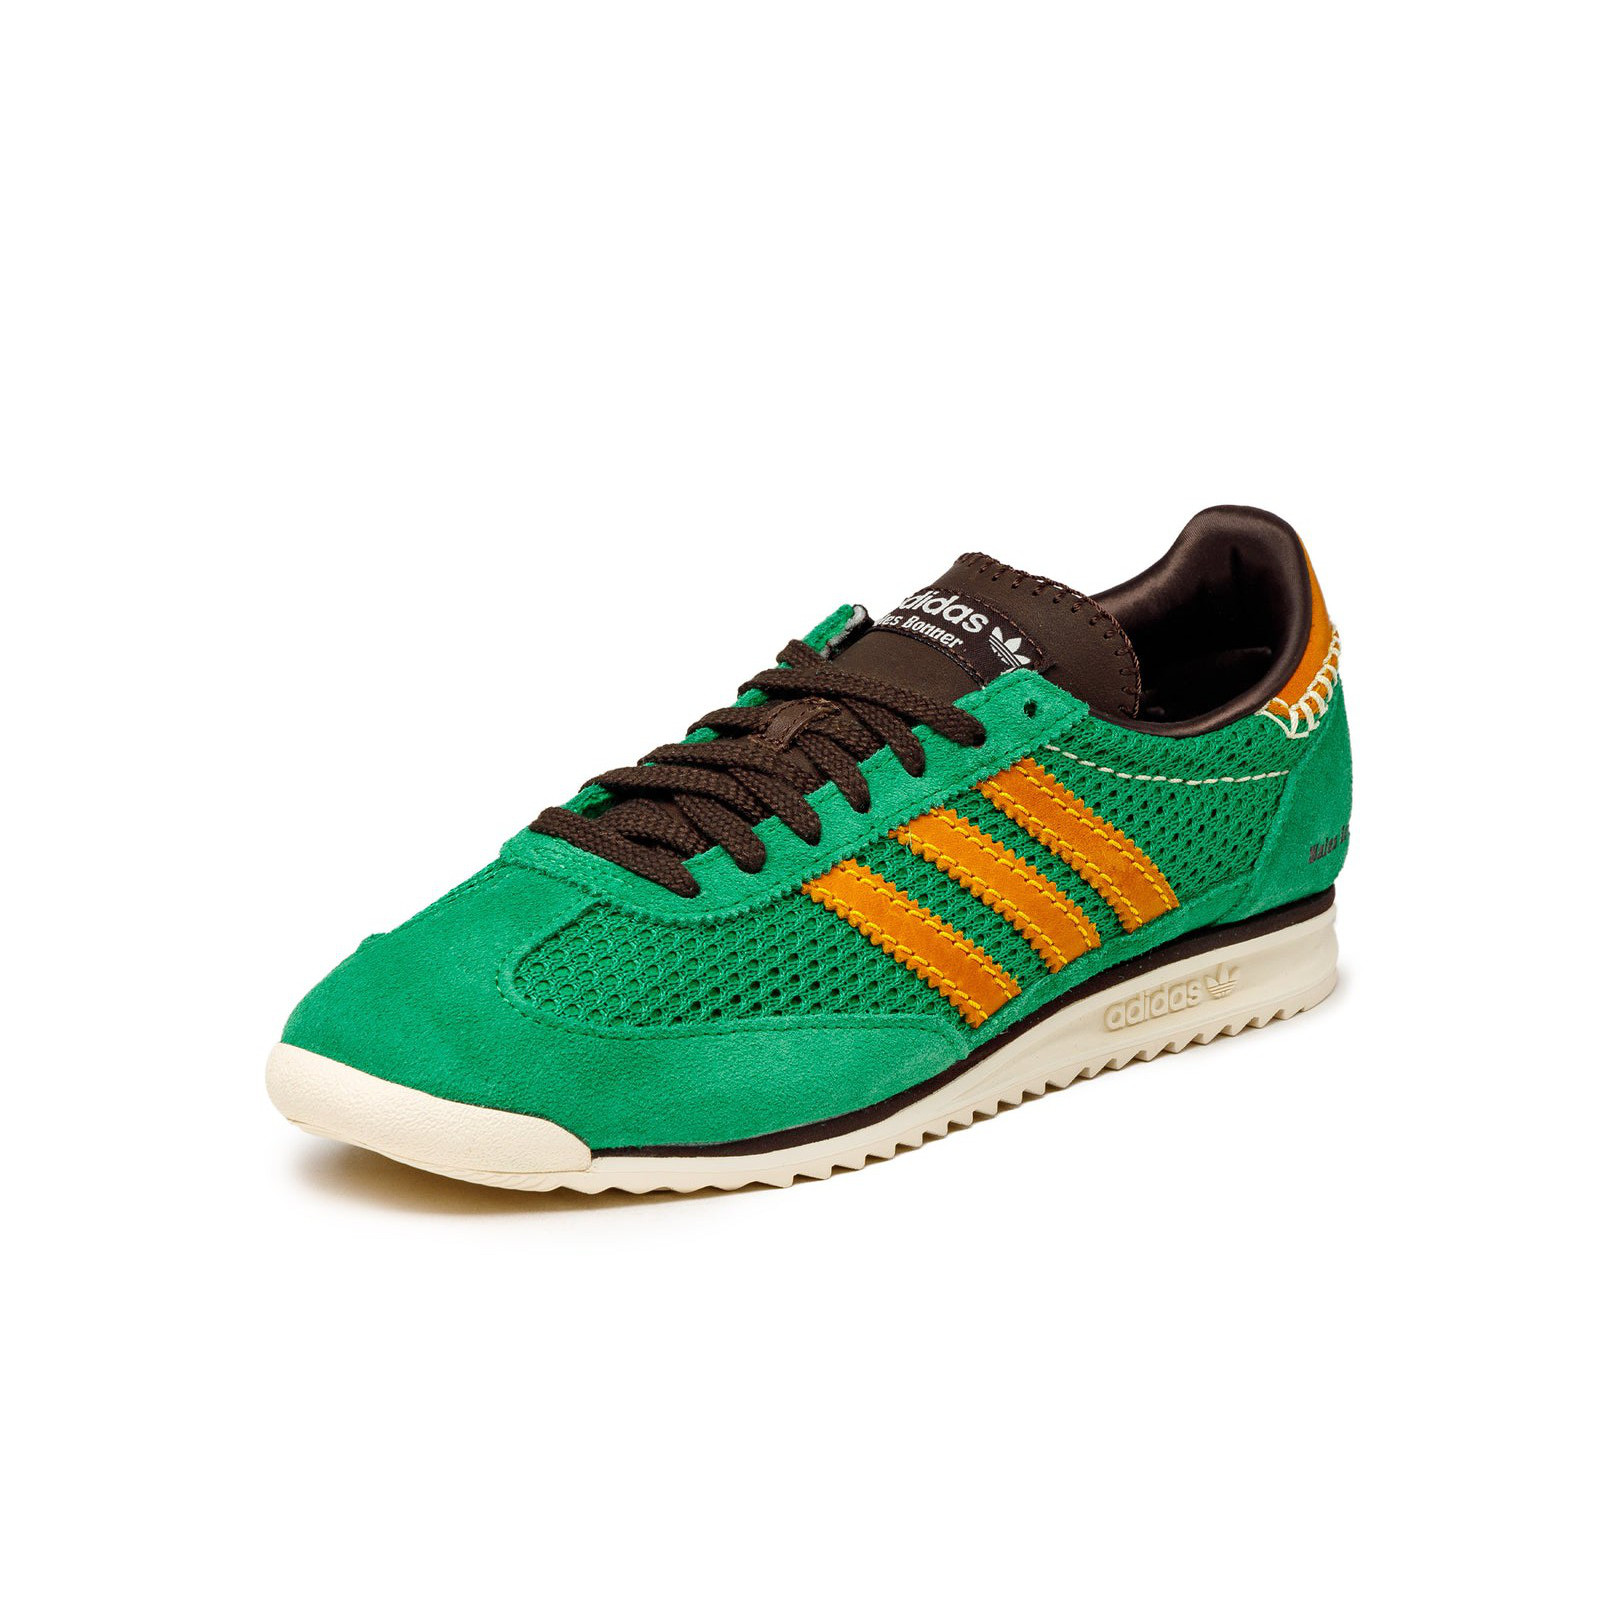 Adidas x Wales Bonner
SL72 Knit
Green / Gold